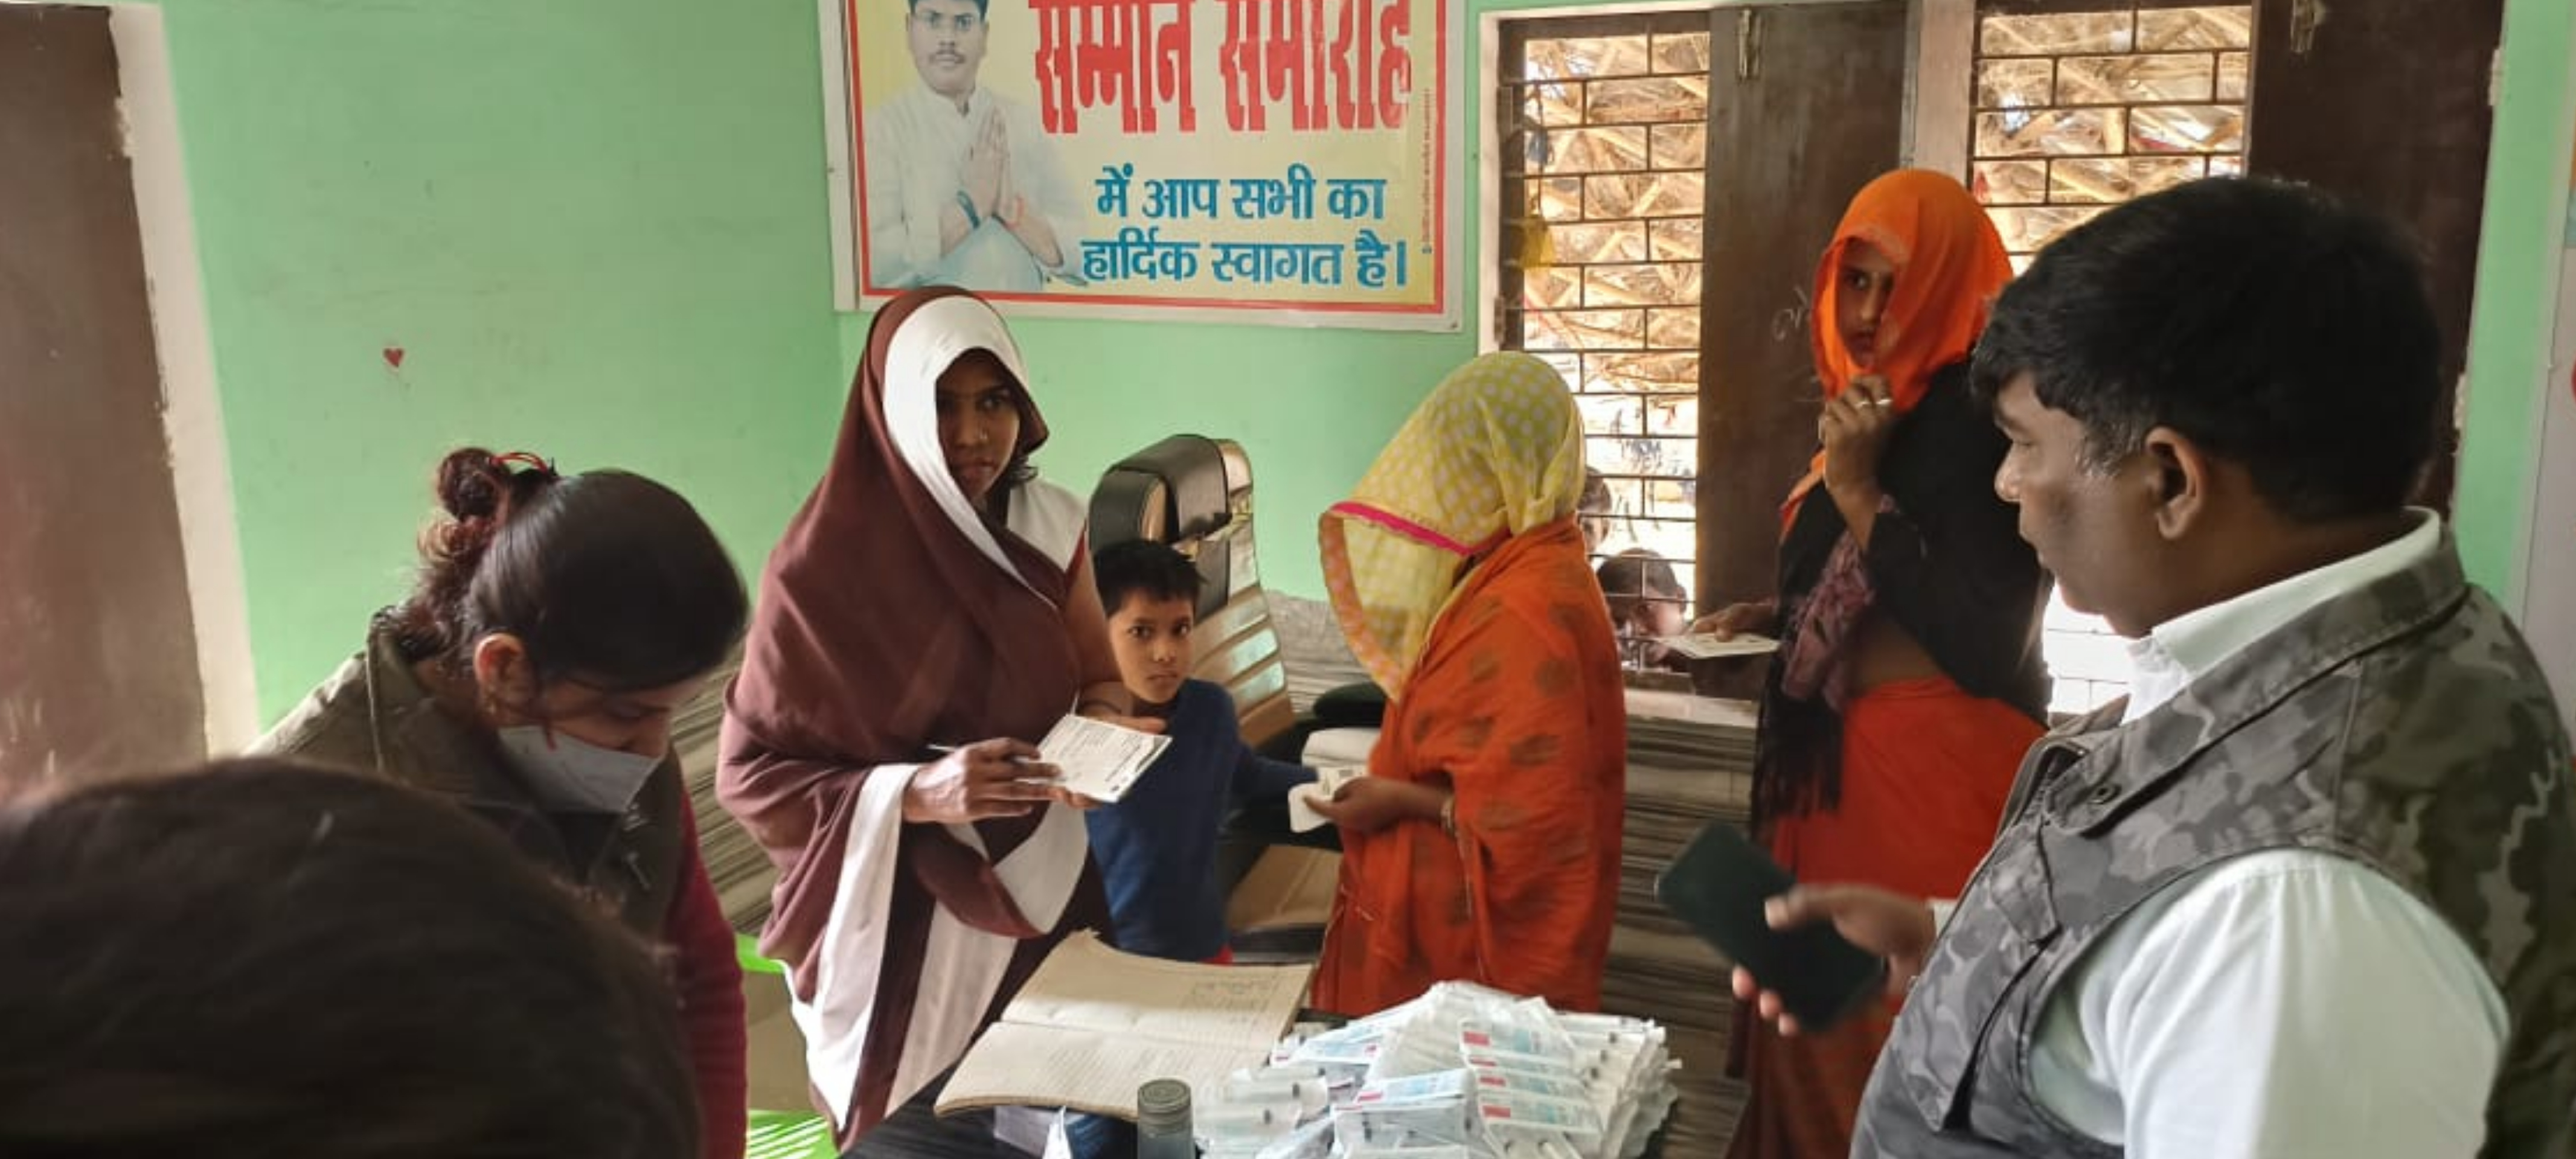 Villagers flee to evade vaccination shots at Aher village in Uttar Pradesh